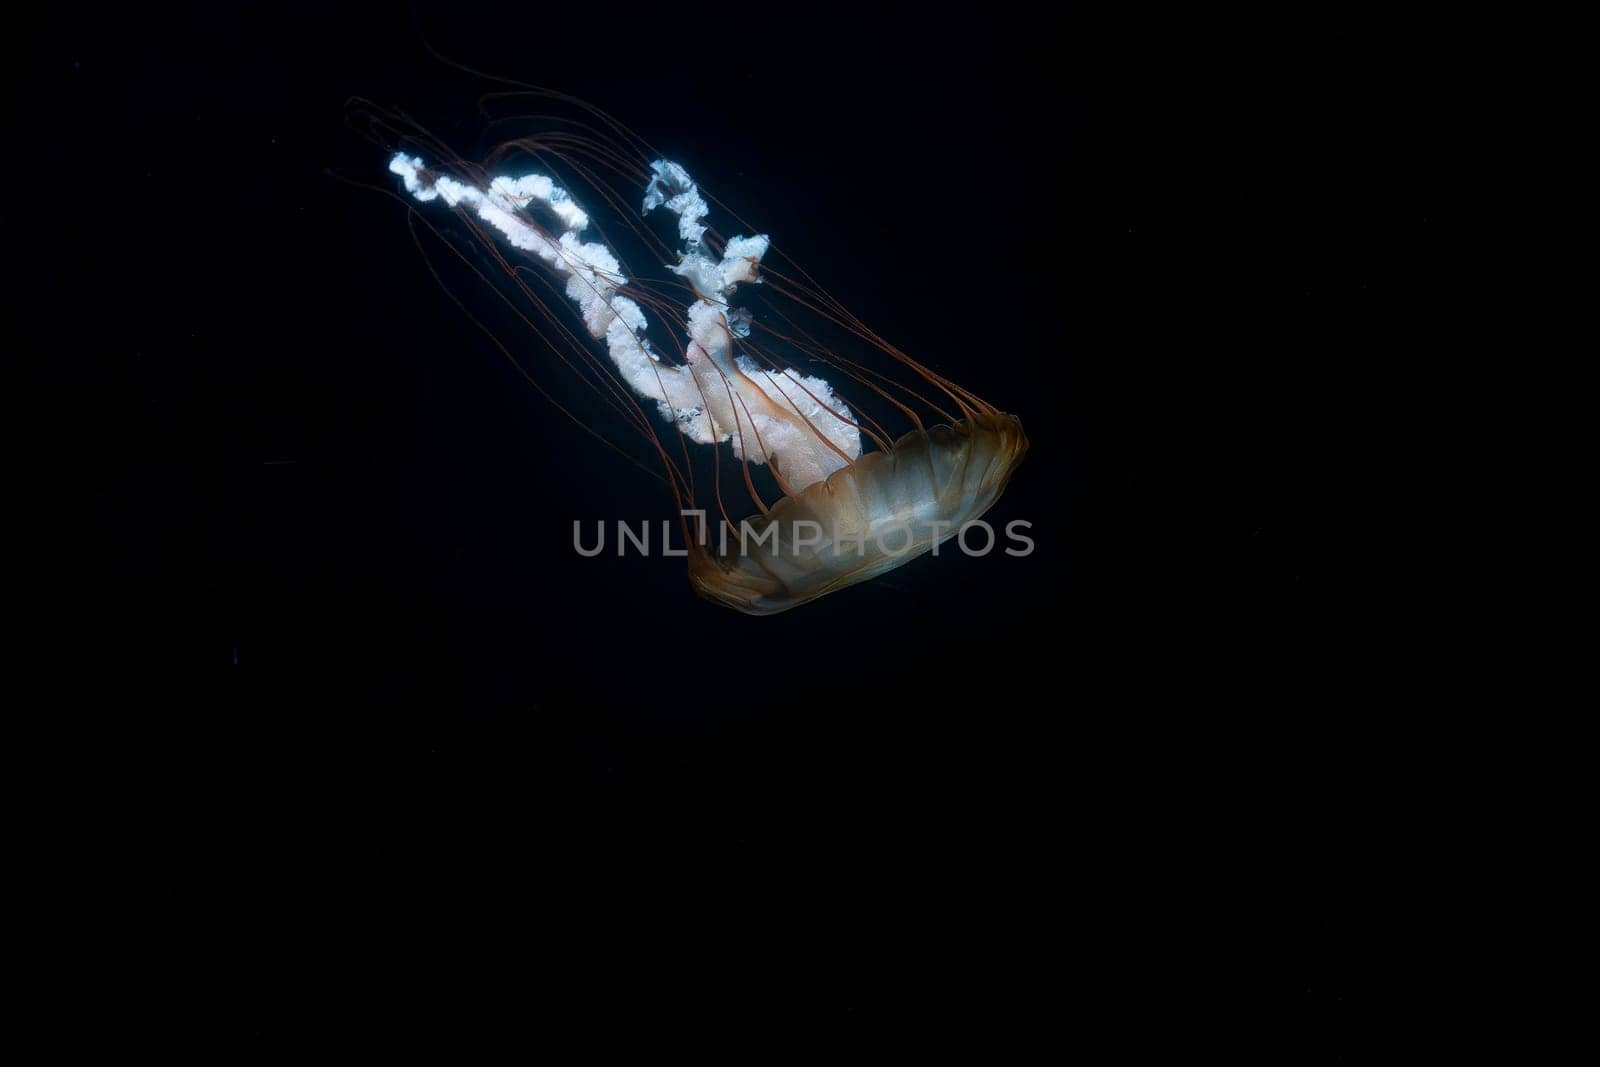 sea nettle chrysaora pasifica in dark water ready to catch plankton by compuinfoto